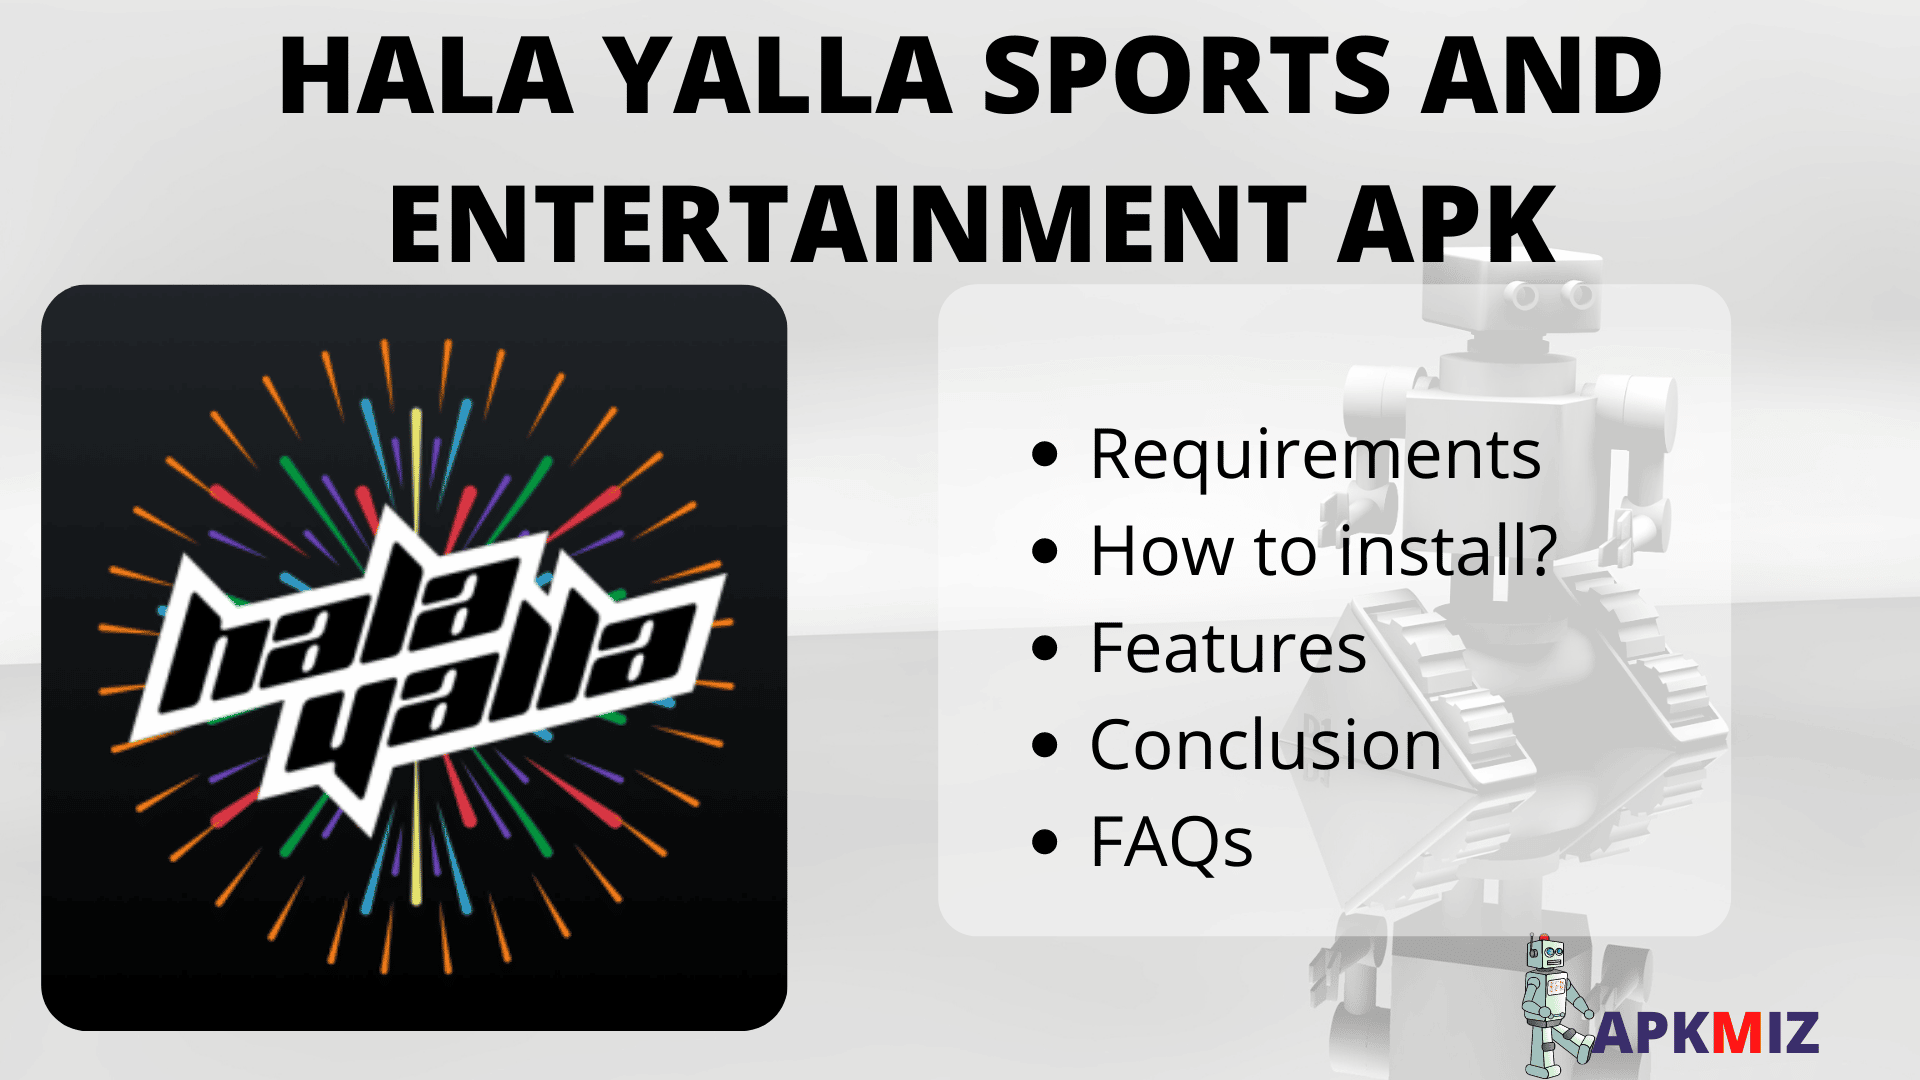 HalaYalla Sports and Entertainment Apk